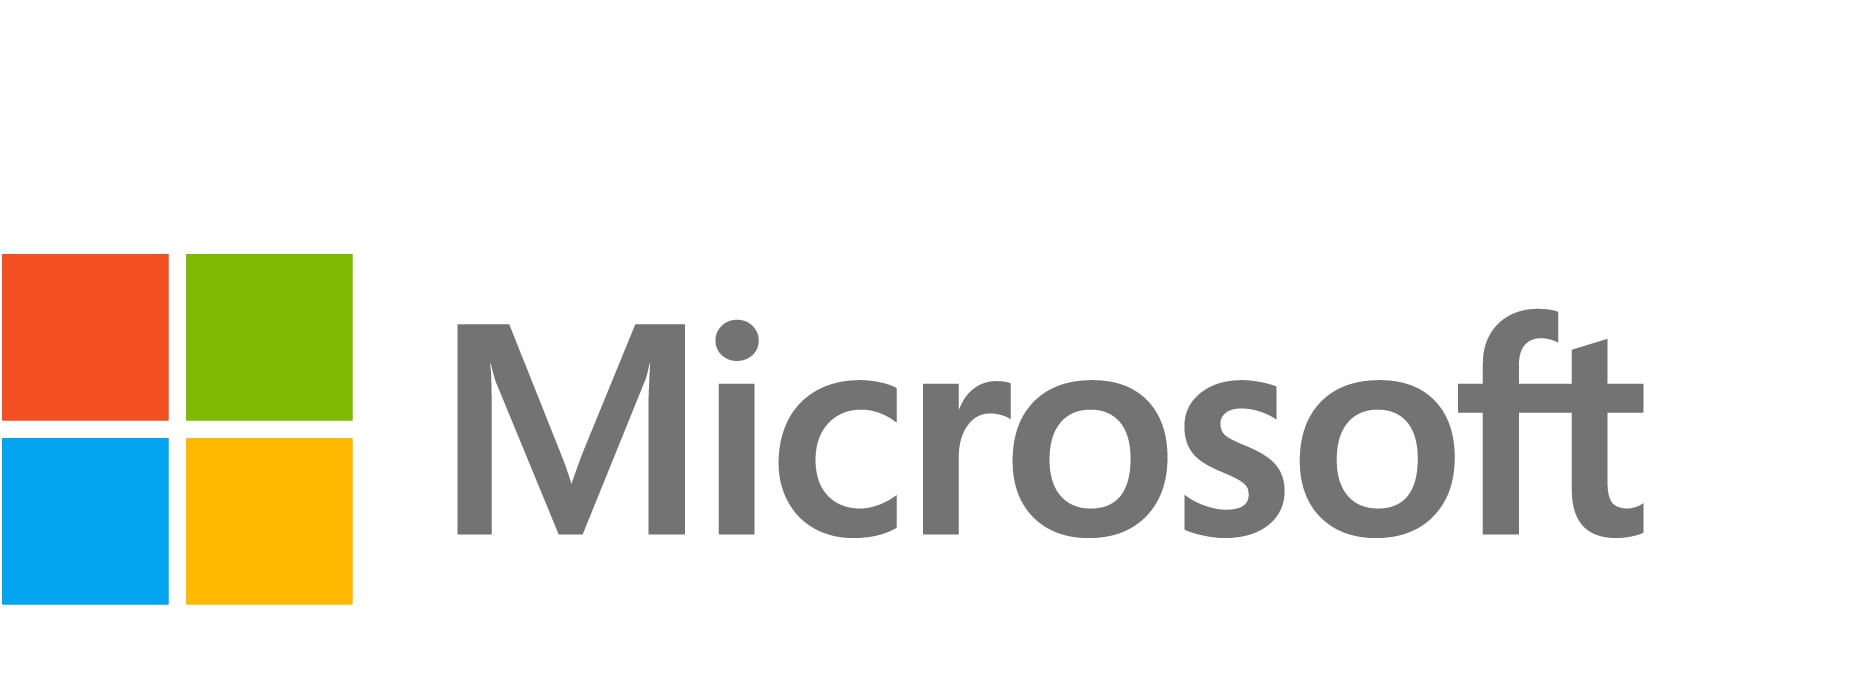 Microsoft 365 Apps for Enterprise Software Subscription